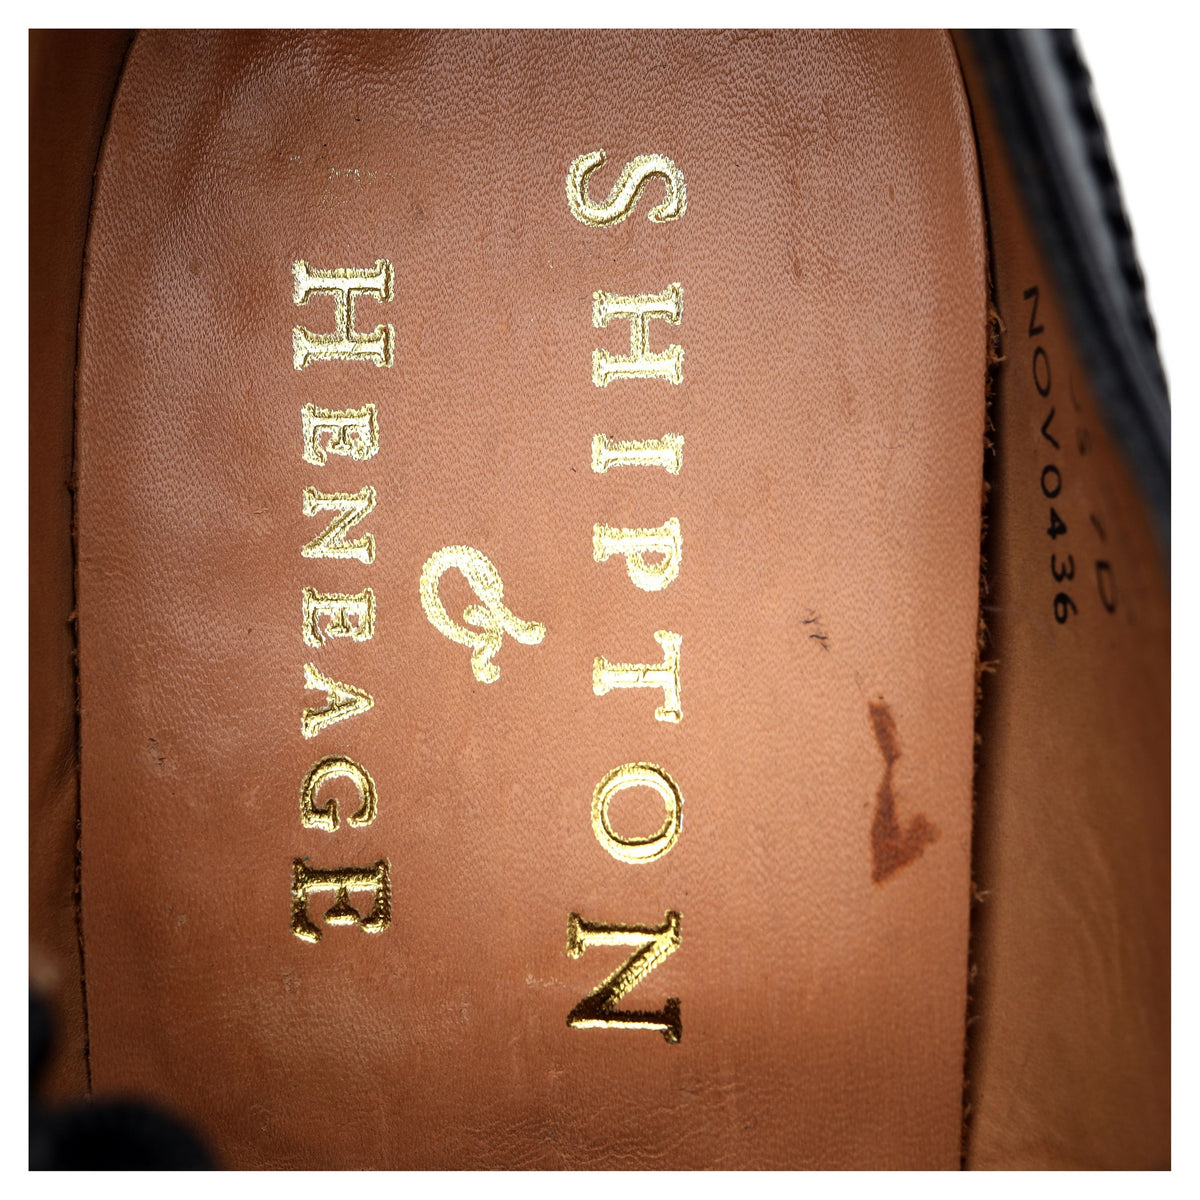 Shipton &amp; Heneage &#39;Vienna&#39; Black Leather Slip On Loafers UK 6 F